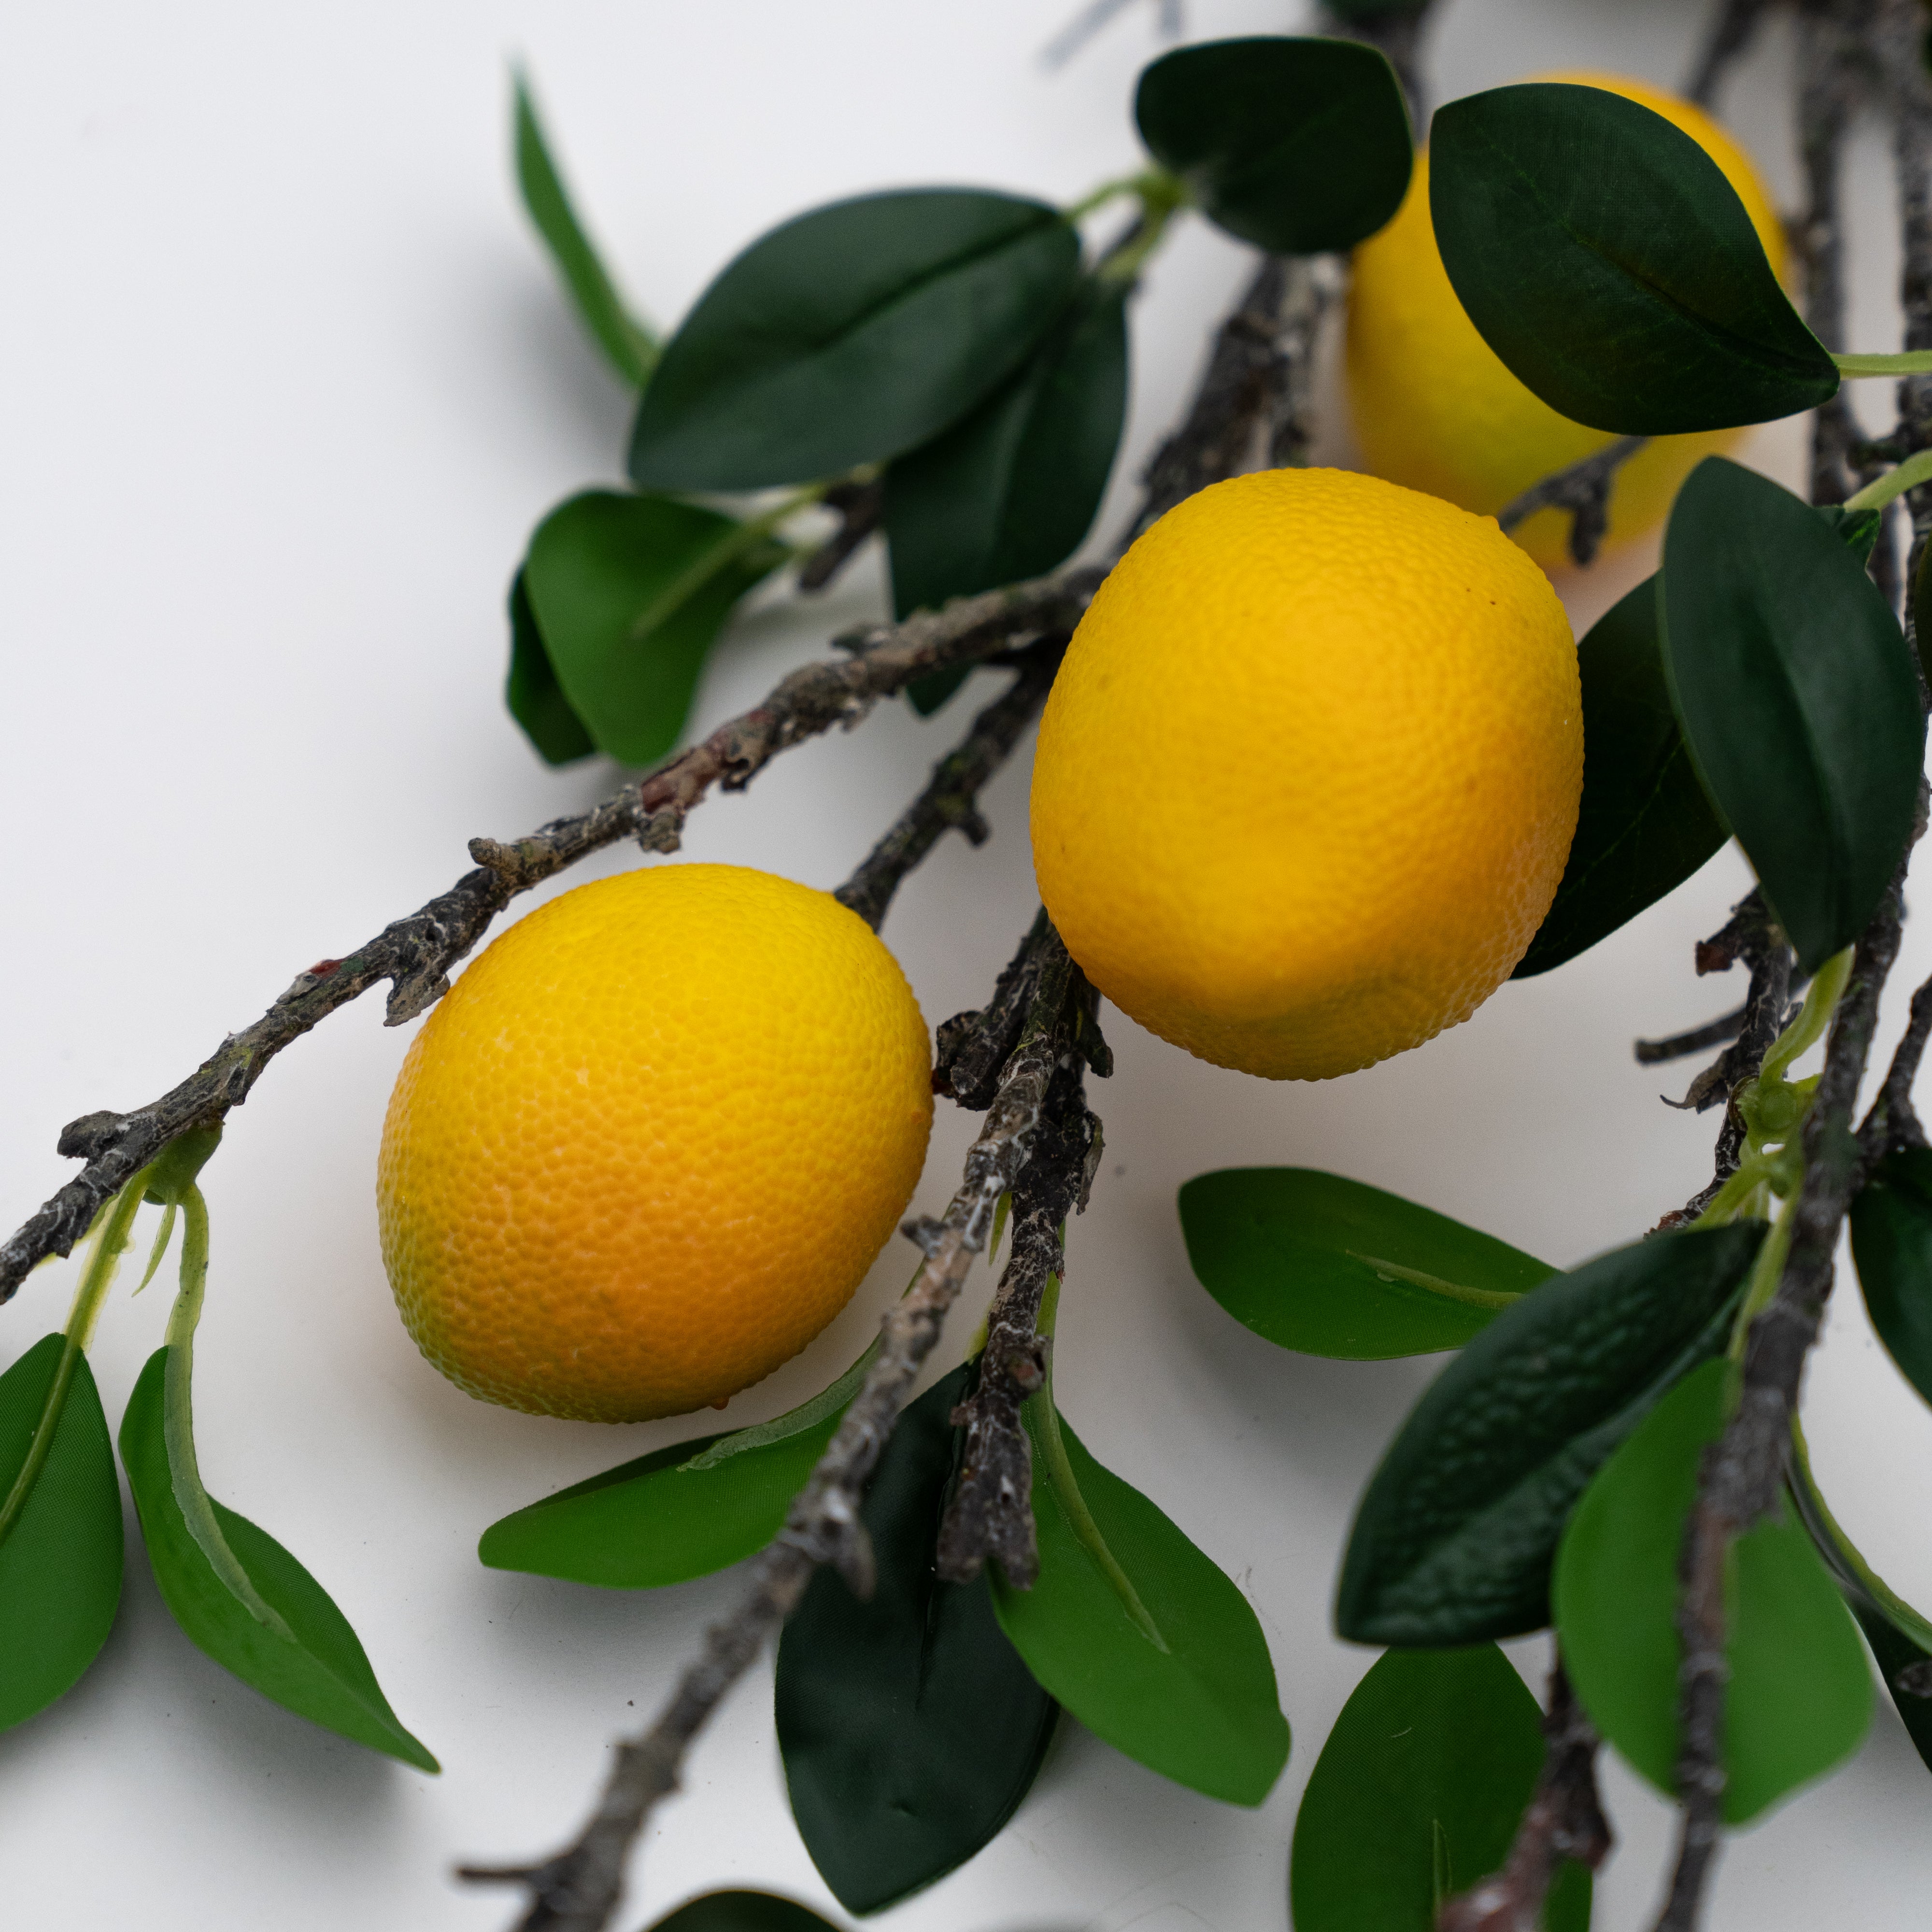 Artificial Plant - Sicilian Lemon  - WS Living - UAE - Artificial Flowers Wood and steel Furnitures - Dubai